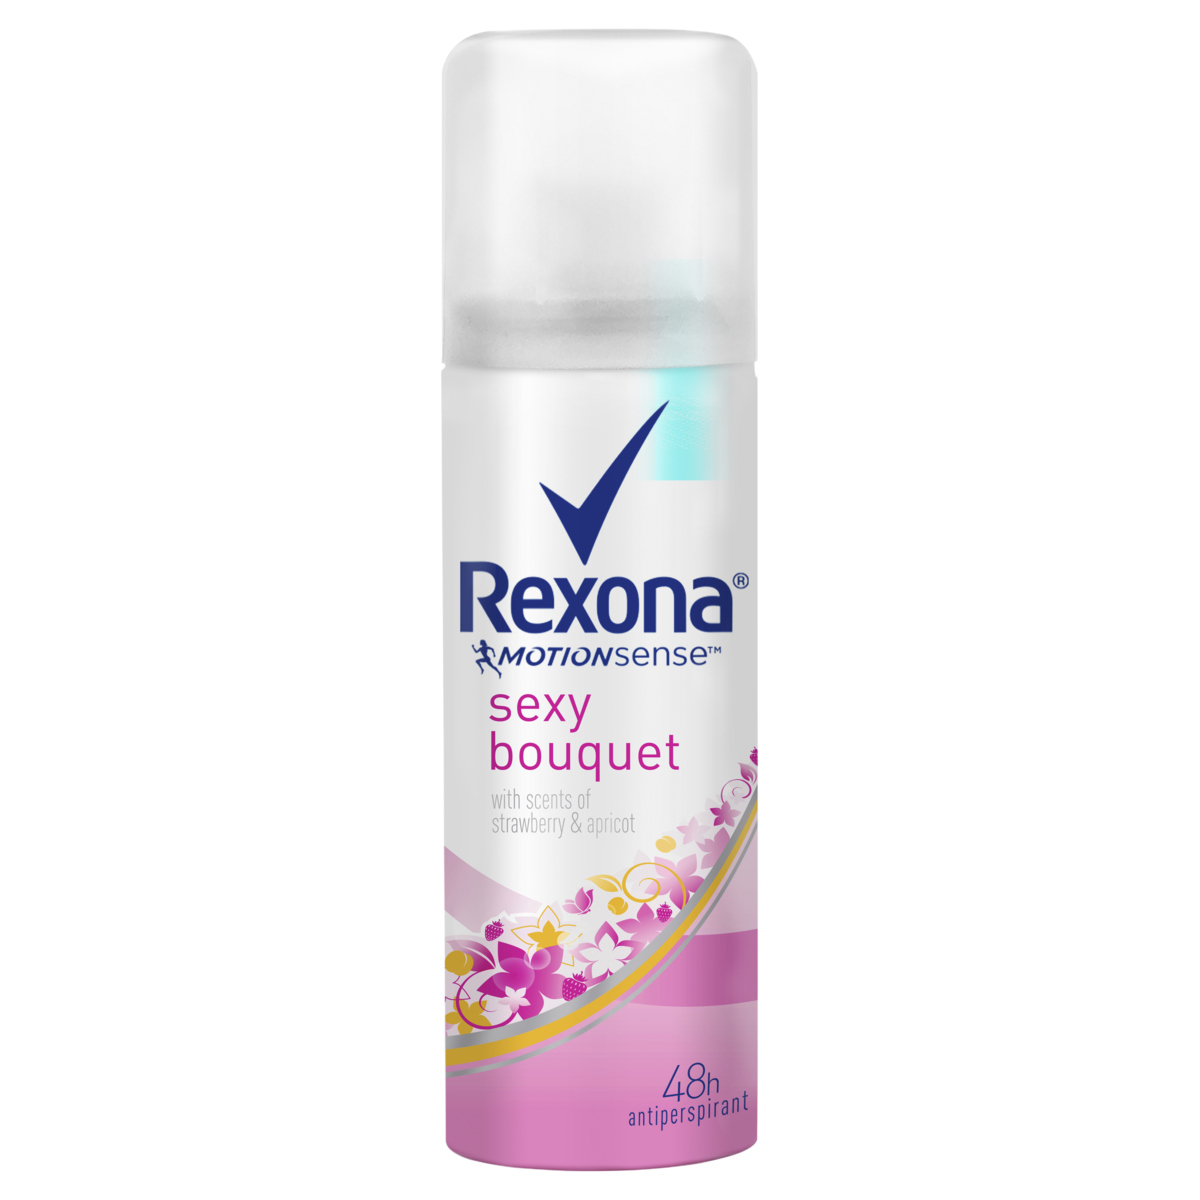 Rexona 50ml MotionSense Sexy Bouquet Antiperspirant